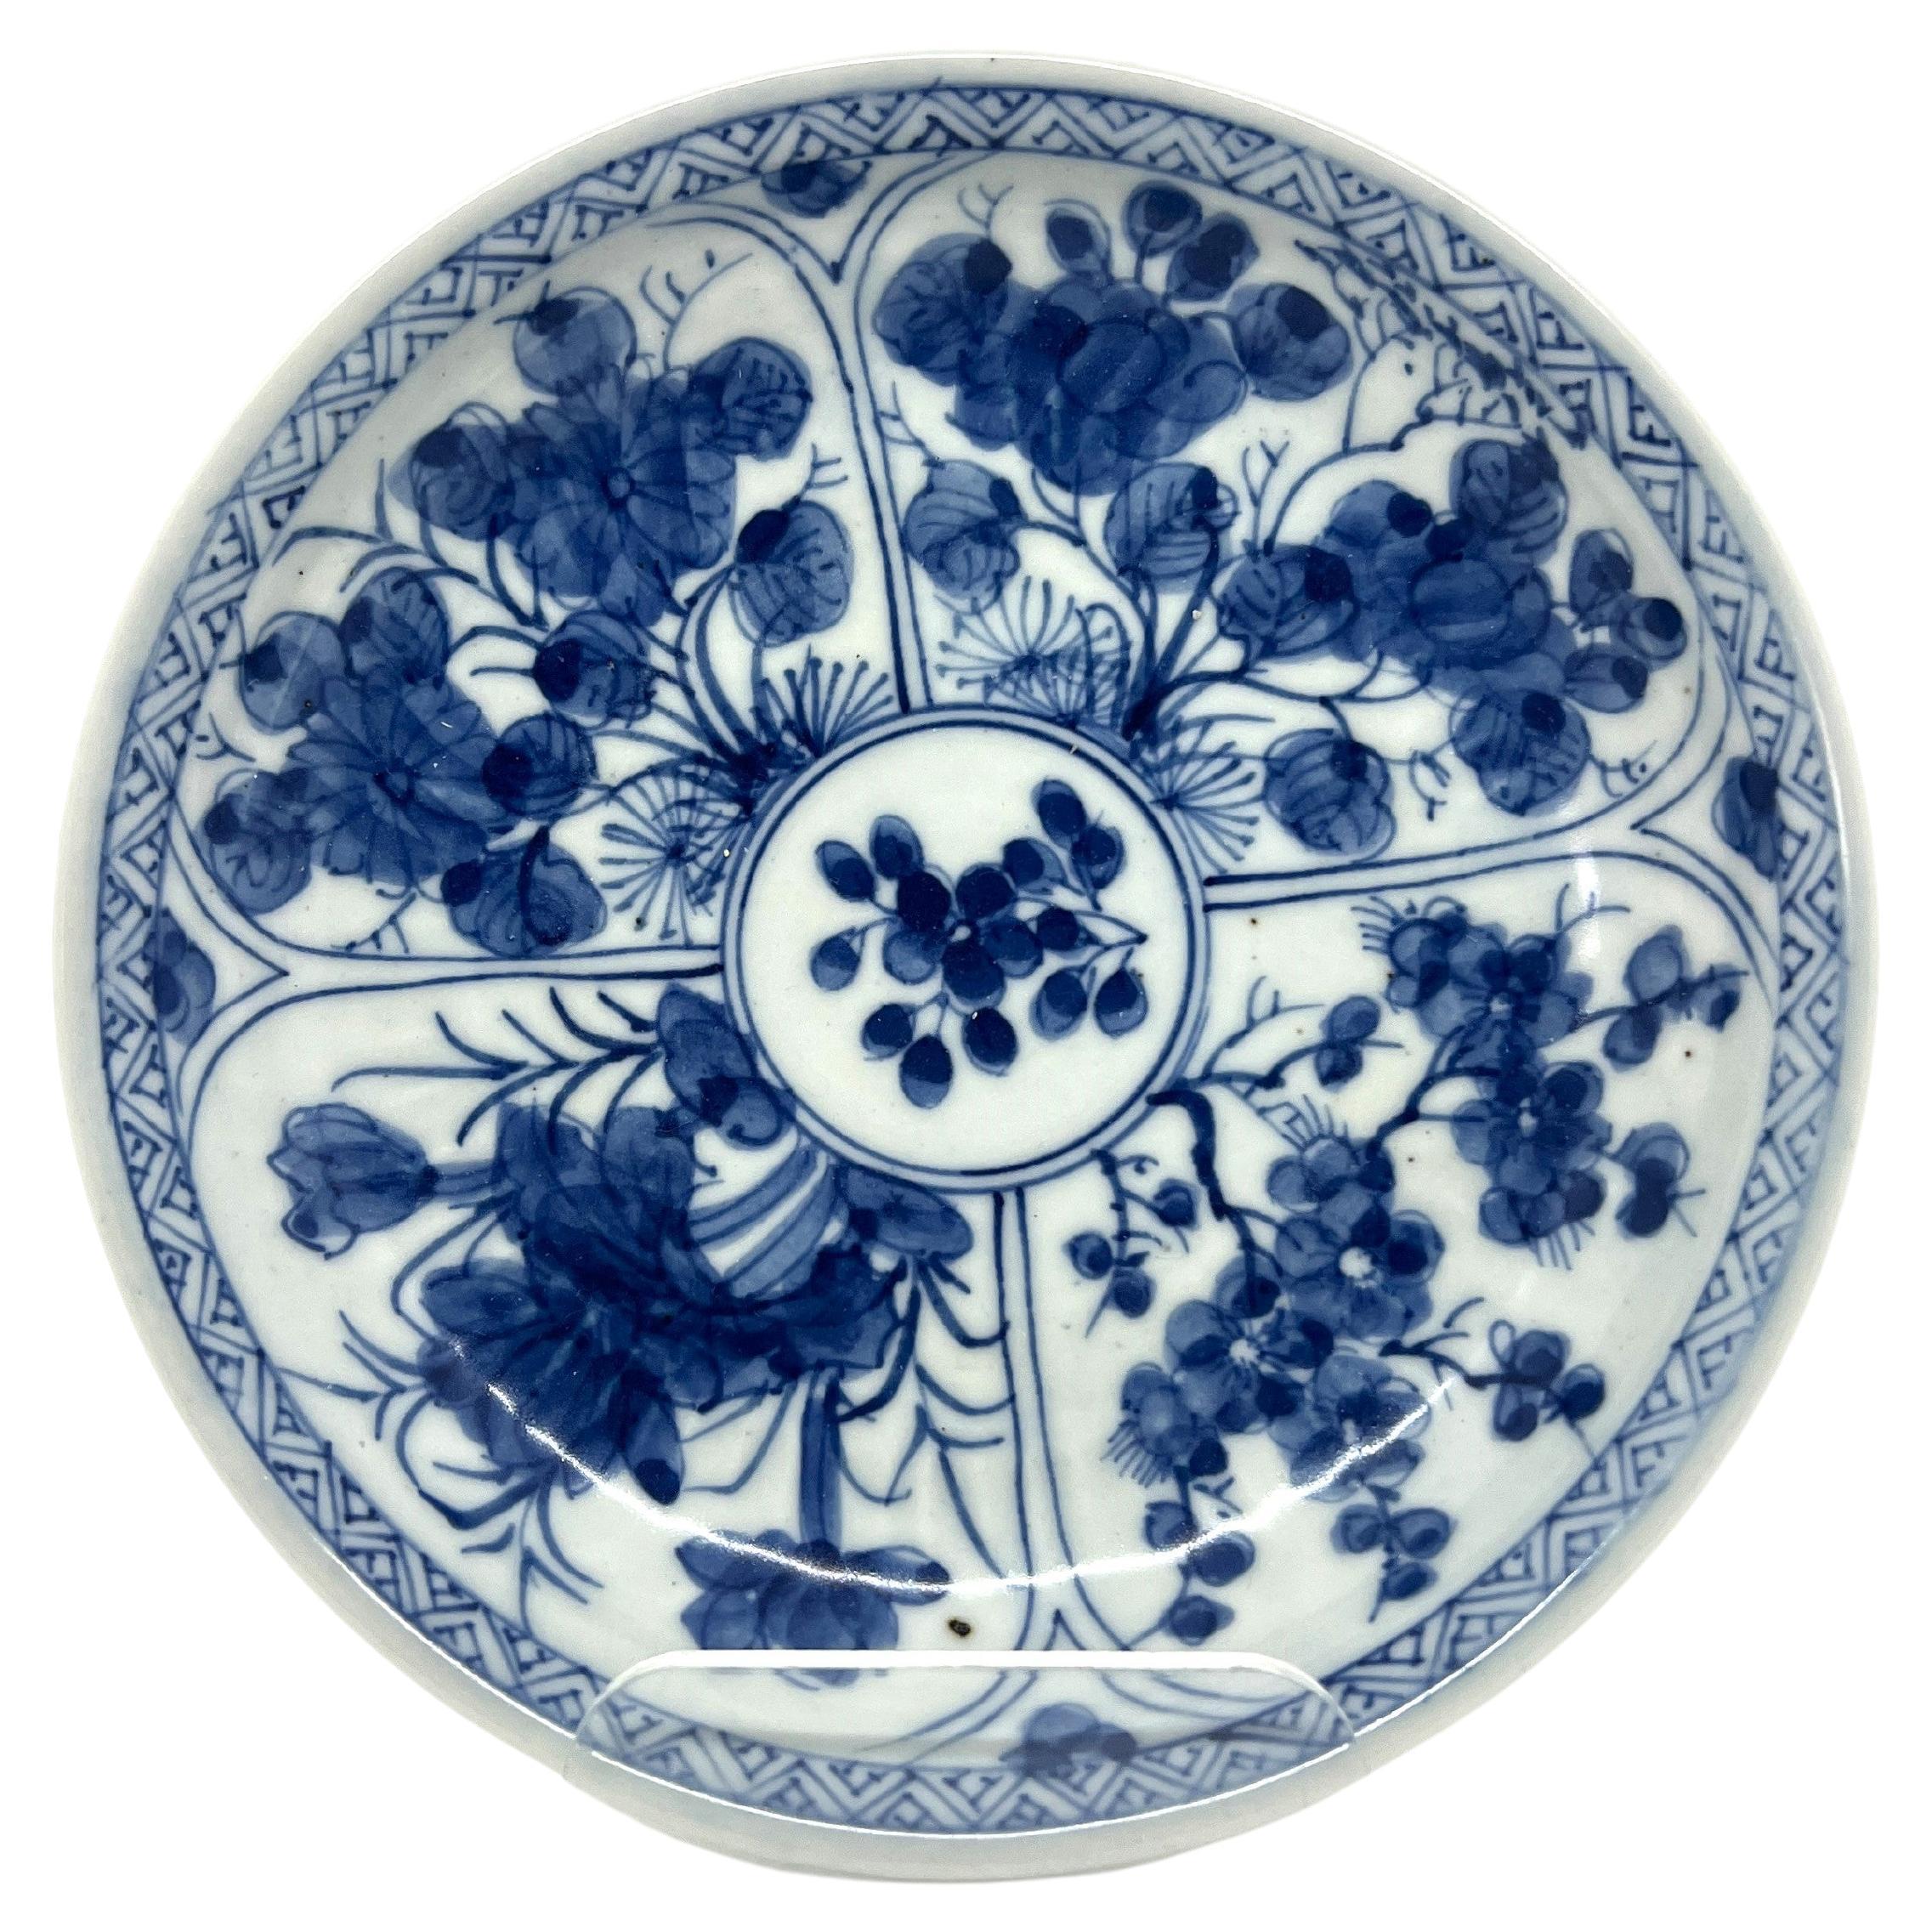 Blue and White Flower Saucer c. 1725, Qing Dynasty, Yongzheng Era